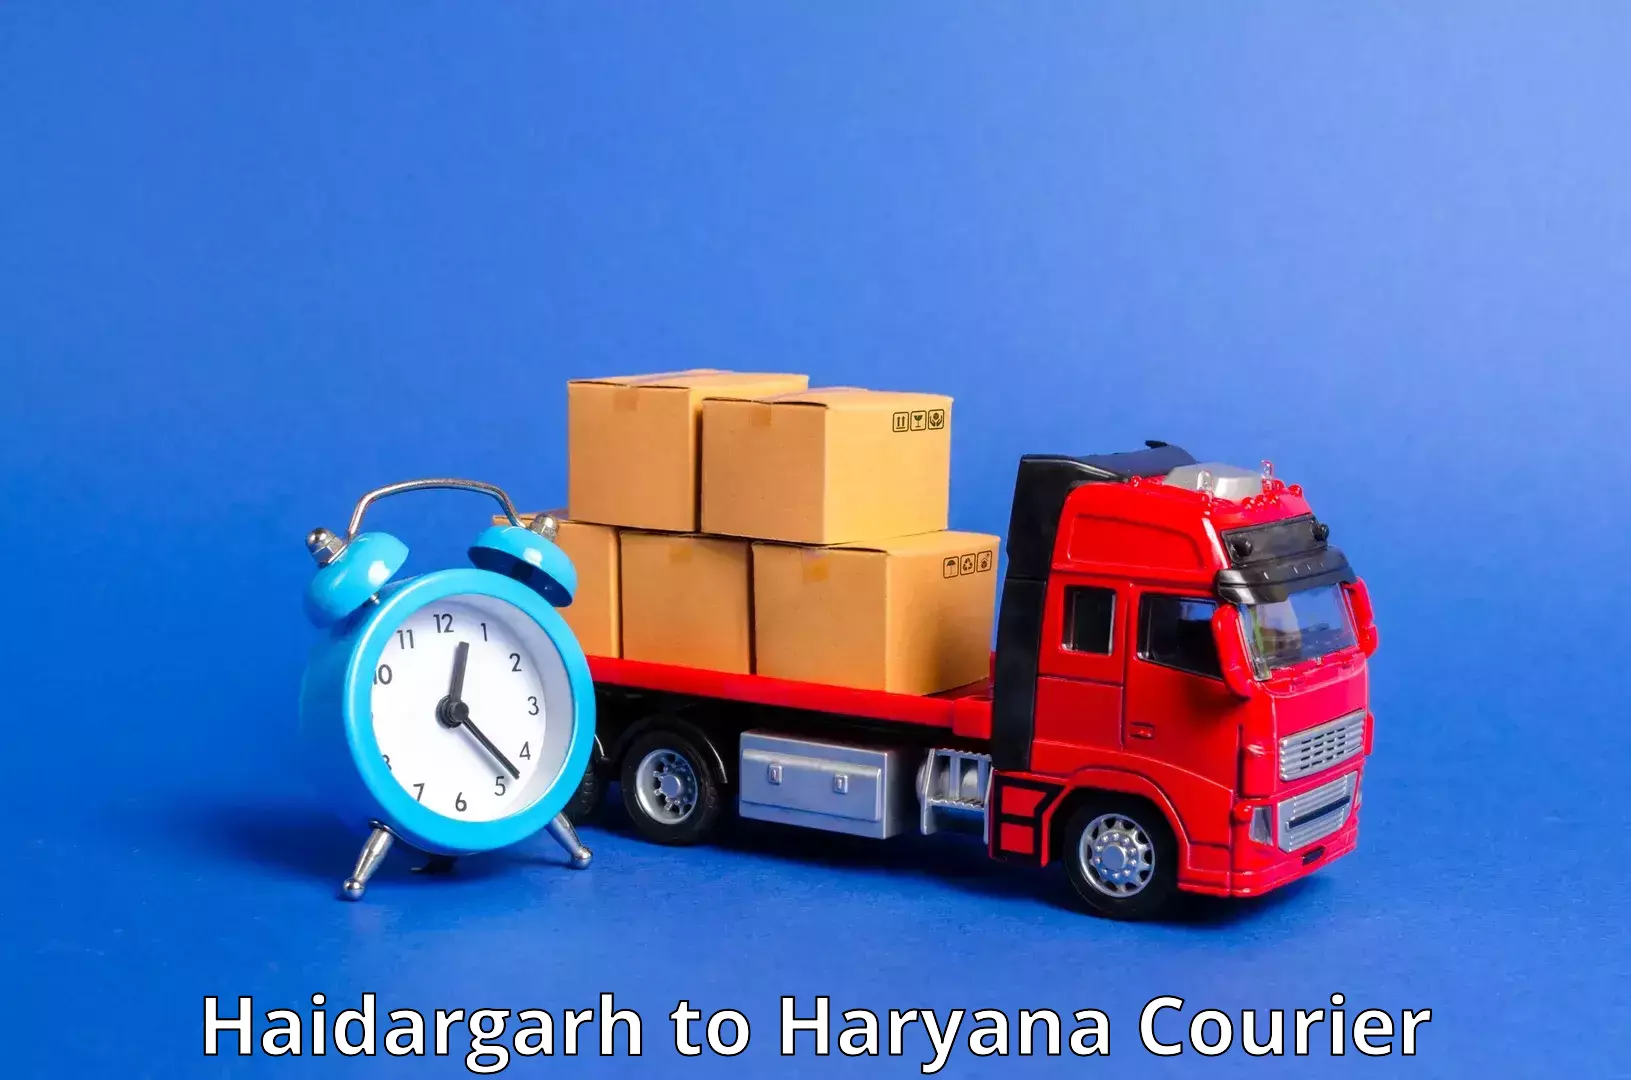 On-call courier service Haidargarh to Panchkula